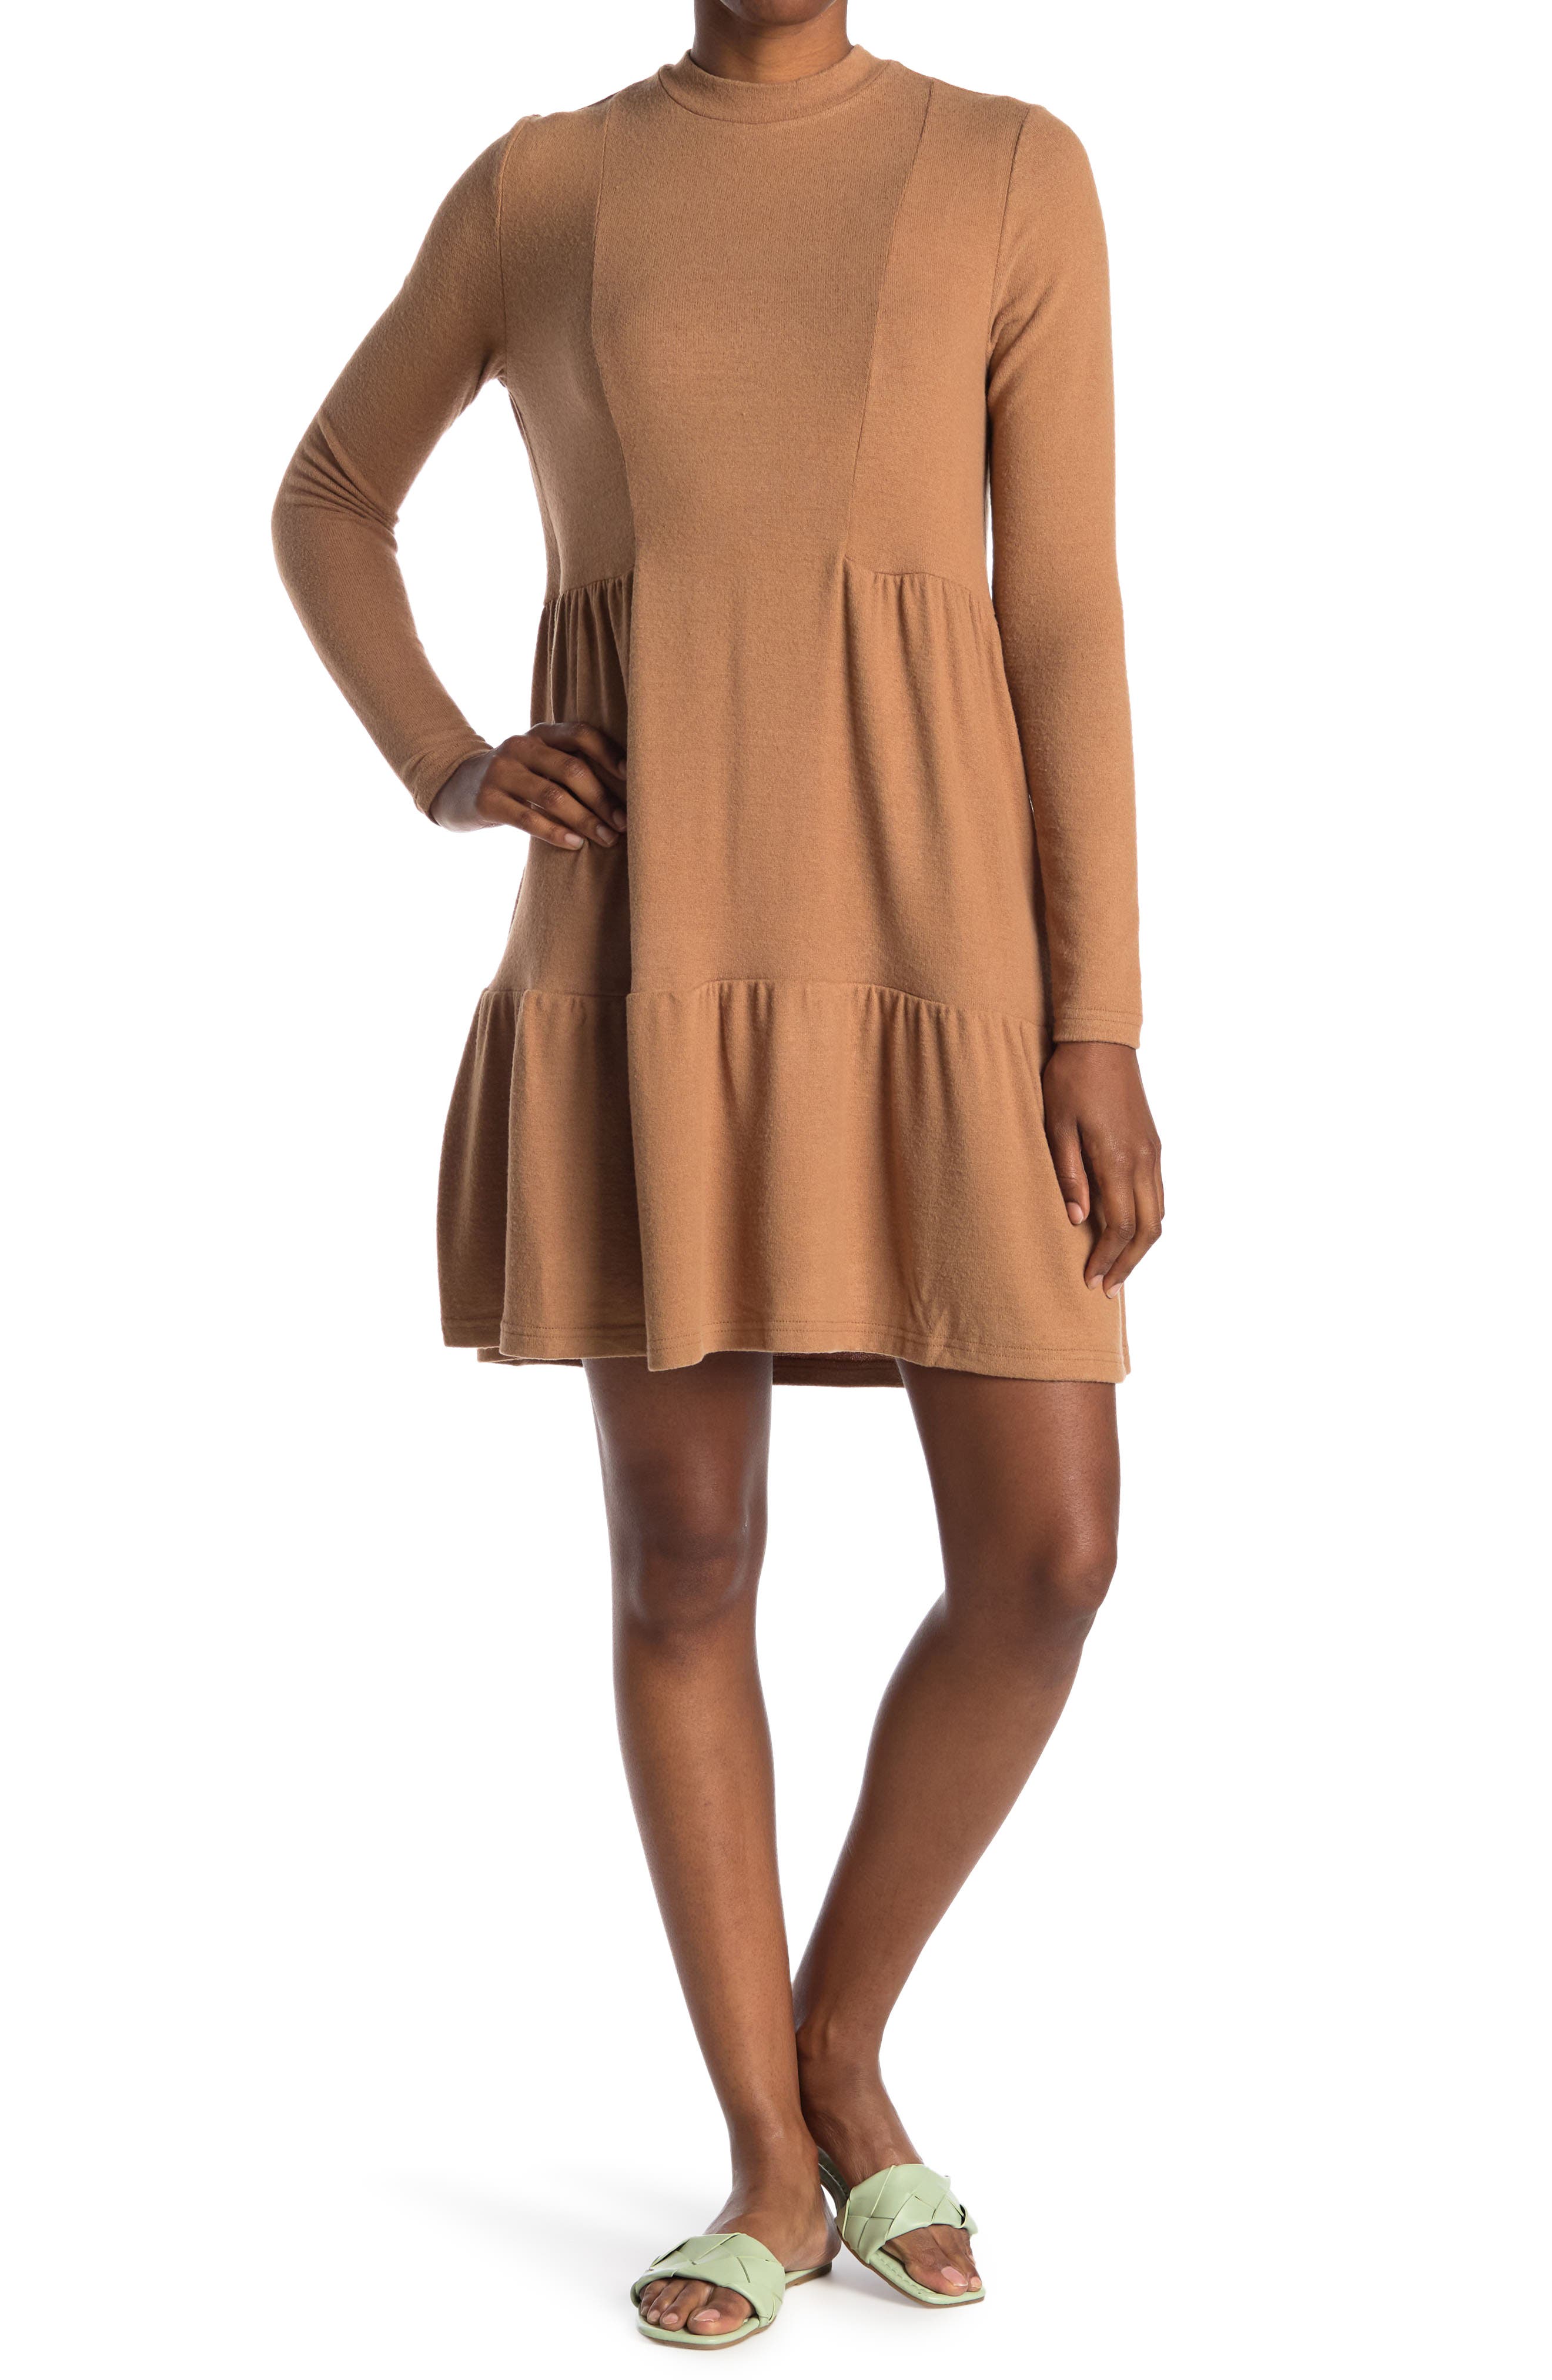 Vero Moda Dorthe Long Sleeve High Neck Ruffled Dress In Medium Brown2